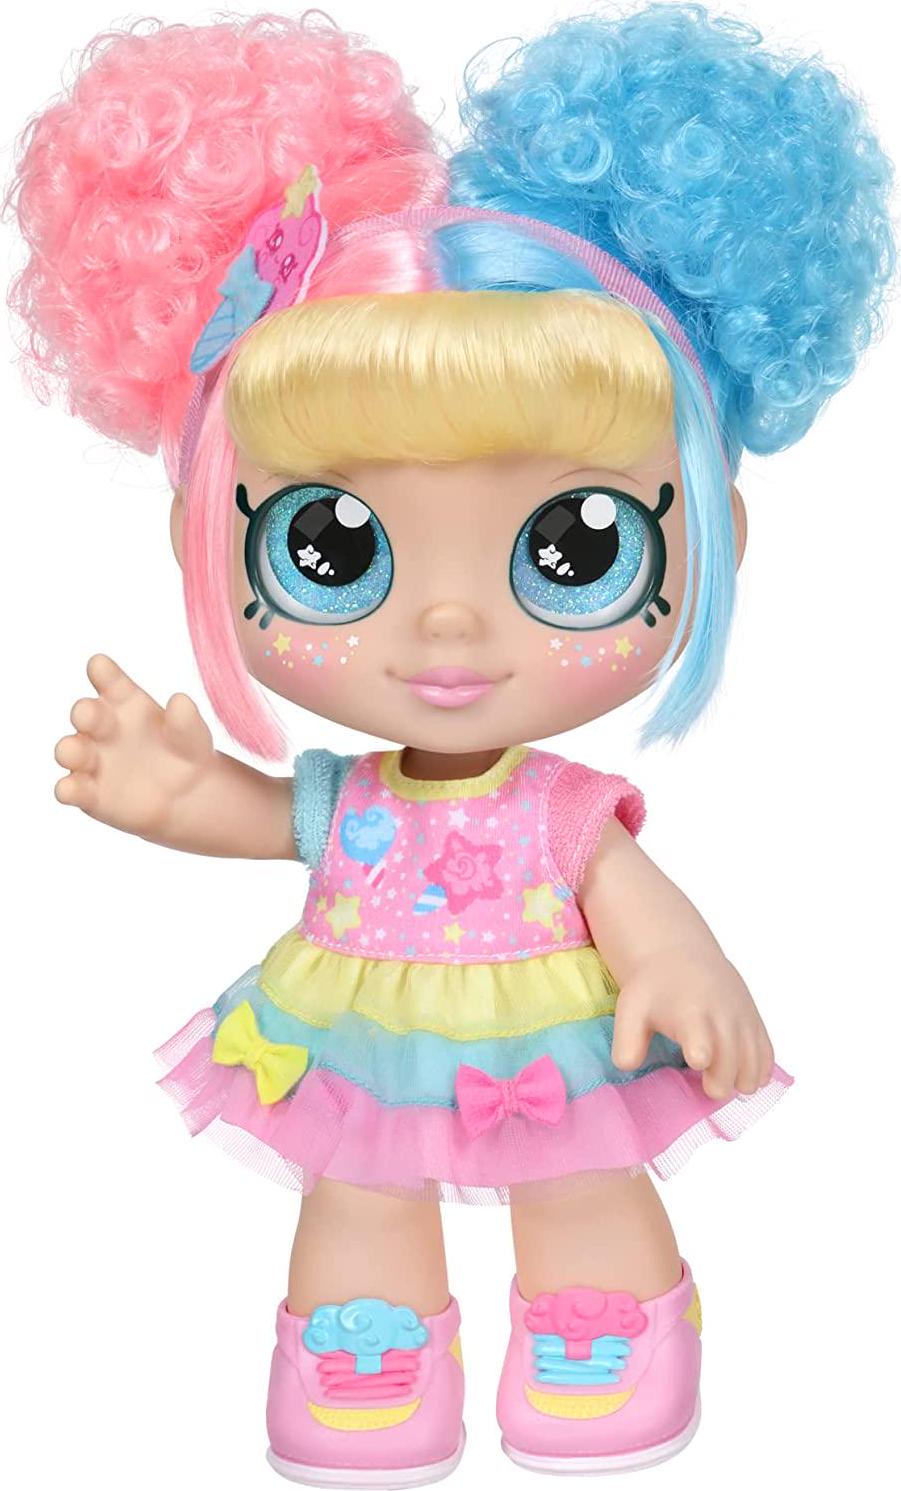 Kindi Kids, Kindi Kids Scented Big Sister: Candy Sweets Pre-School Kindi Kids 25.4cm Doll, Multicolor, 50190